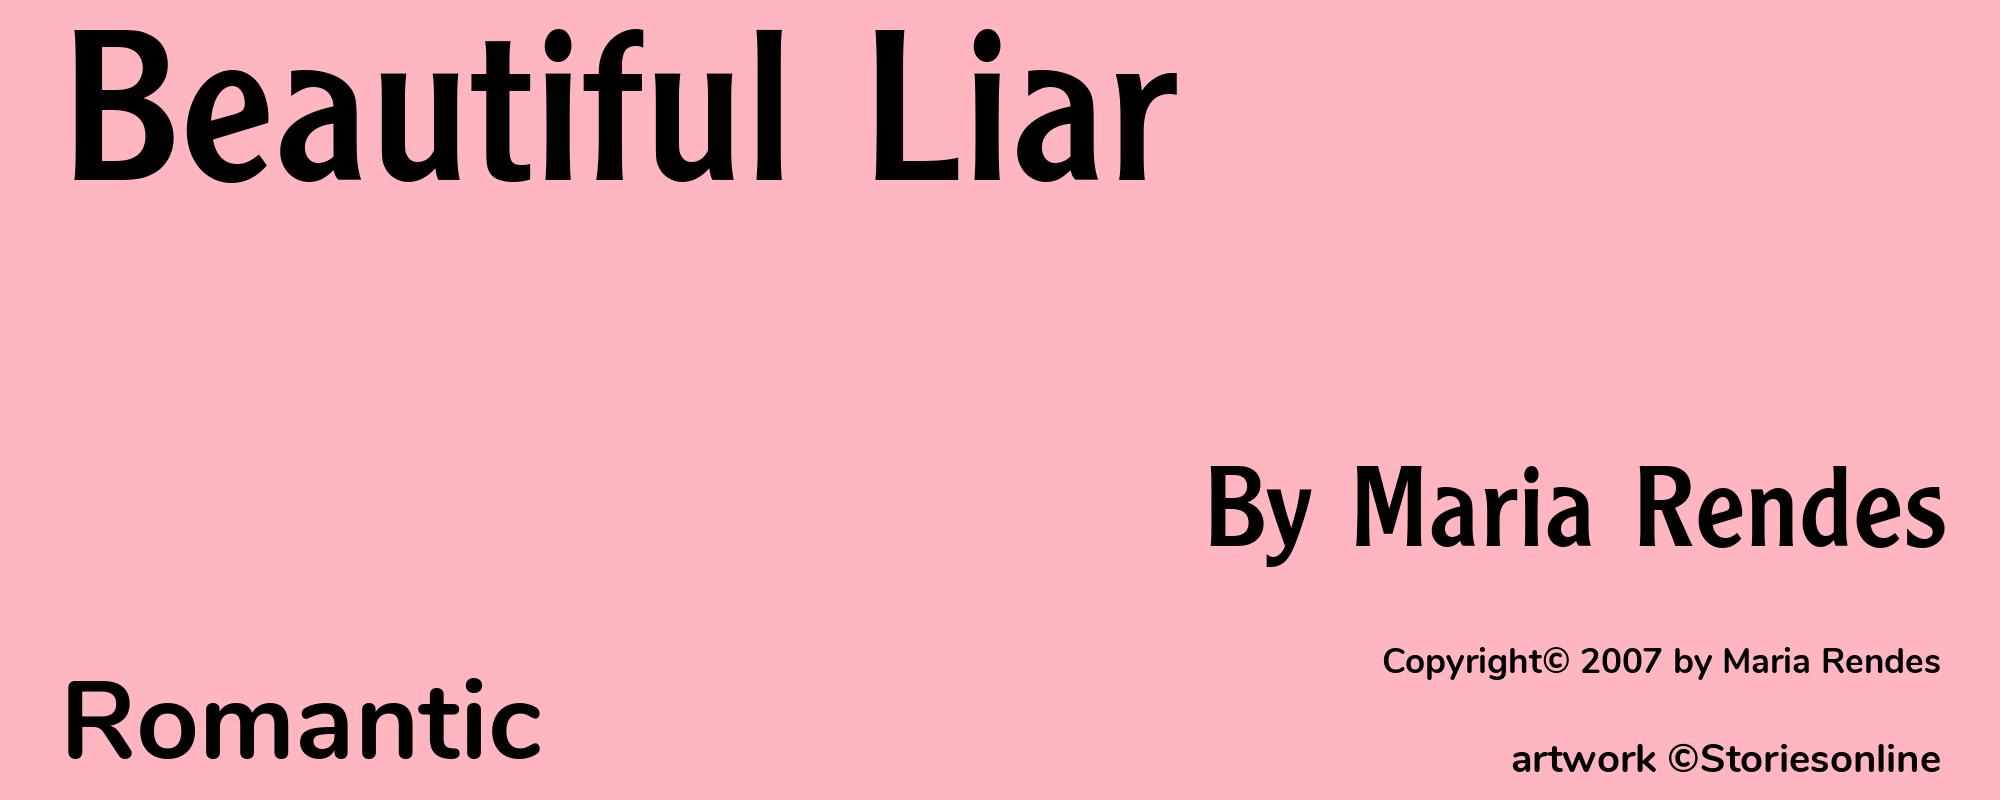 Beautiful Liar - Cover